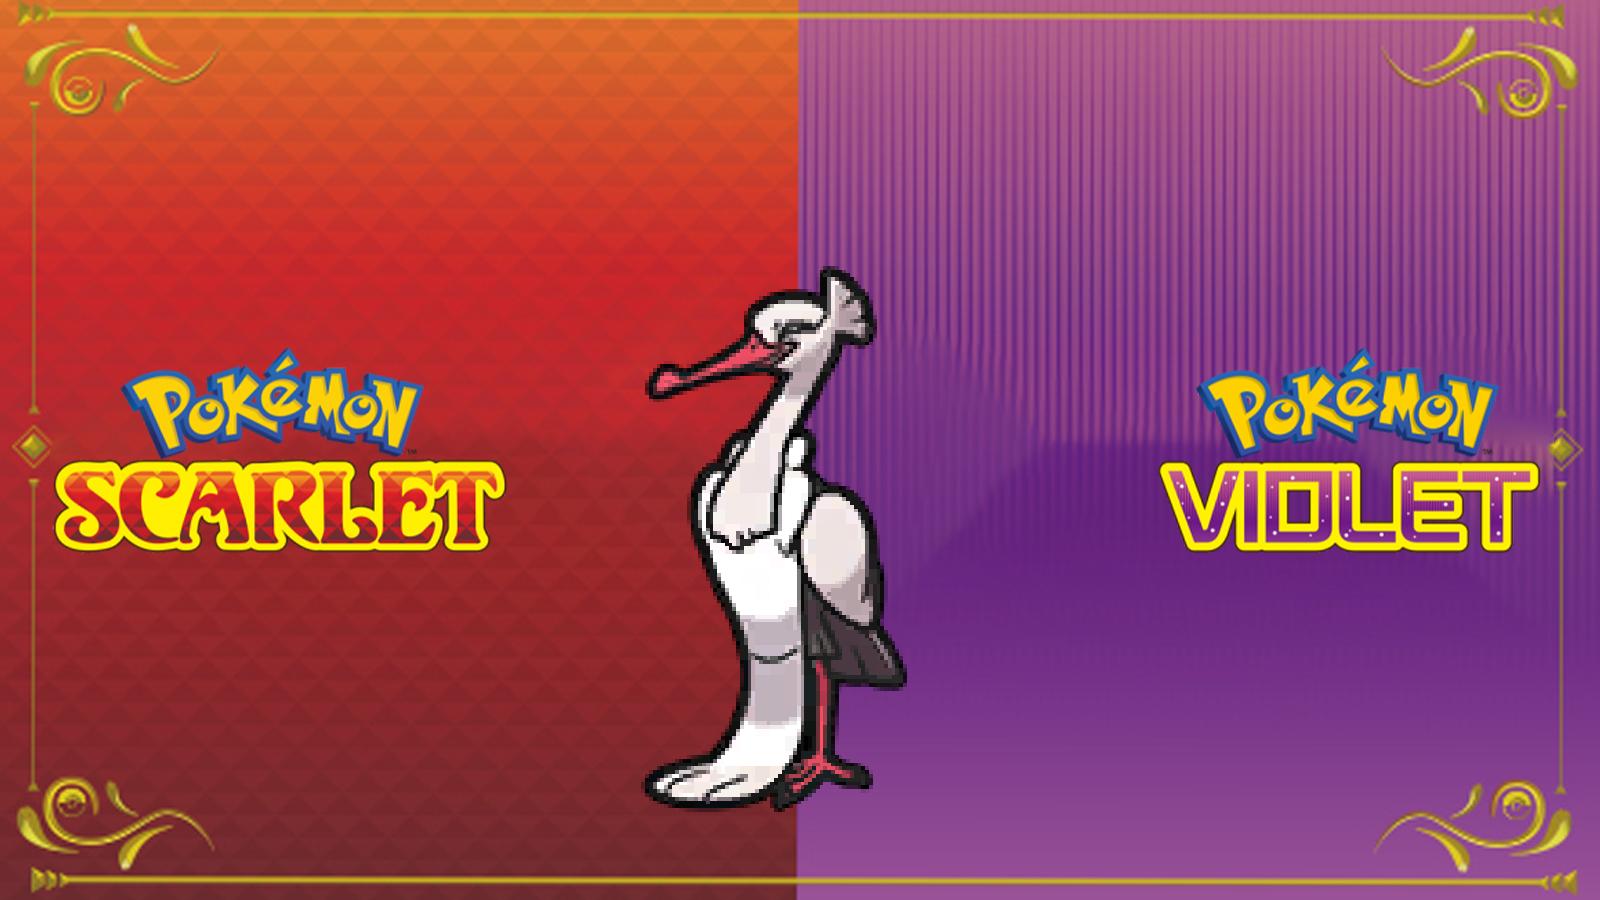 Meloetta shiny 6 IV : Pokemon Ecarlate Violet /Pokemon Scarlet